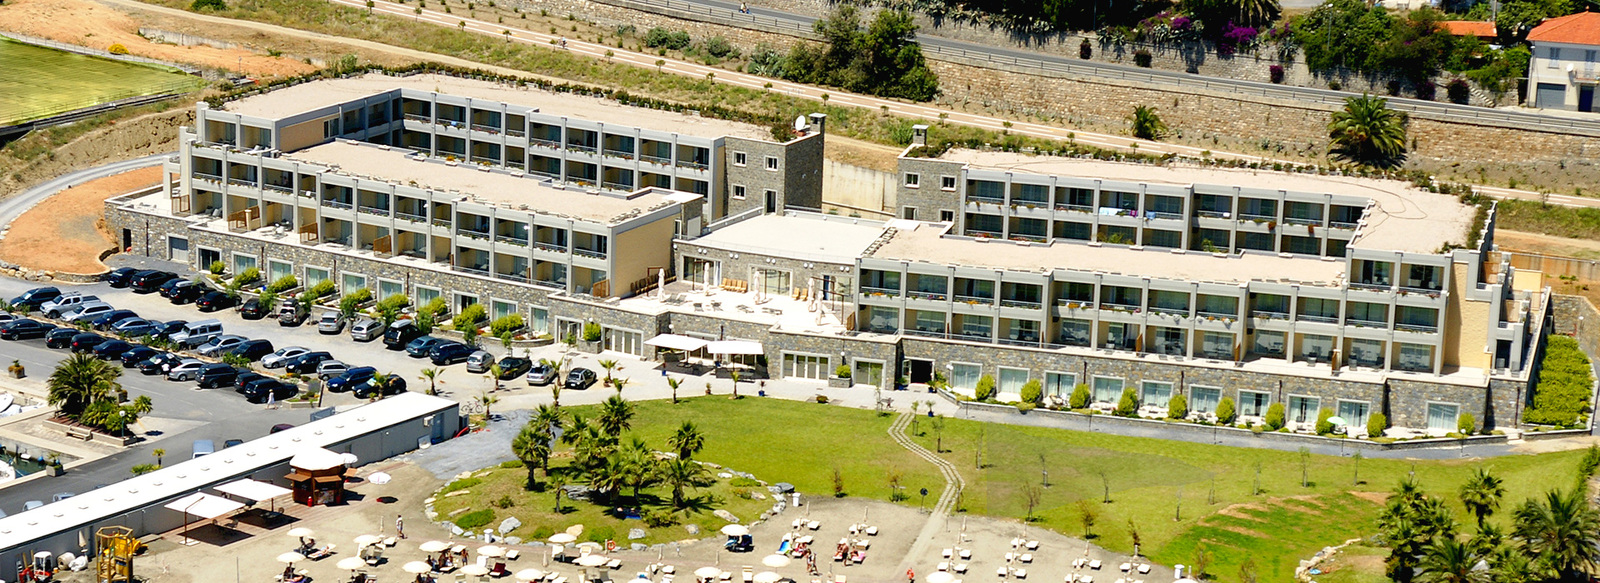 Hotel Aregai Marina 4*, Santo Stefano al Mare, area wellness inclusa, bimbi gratis, 1 notte da € 58